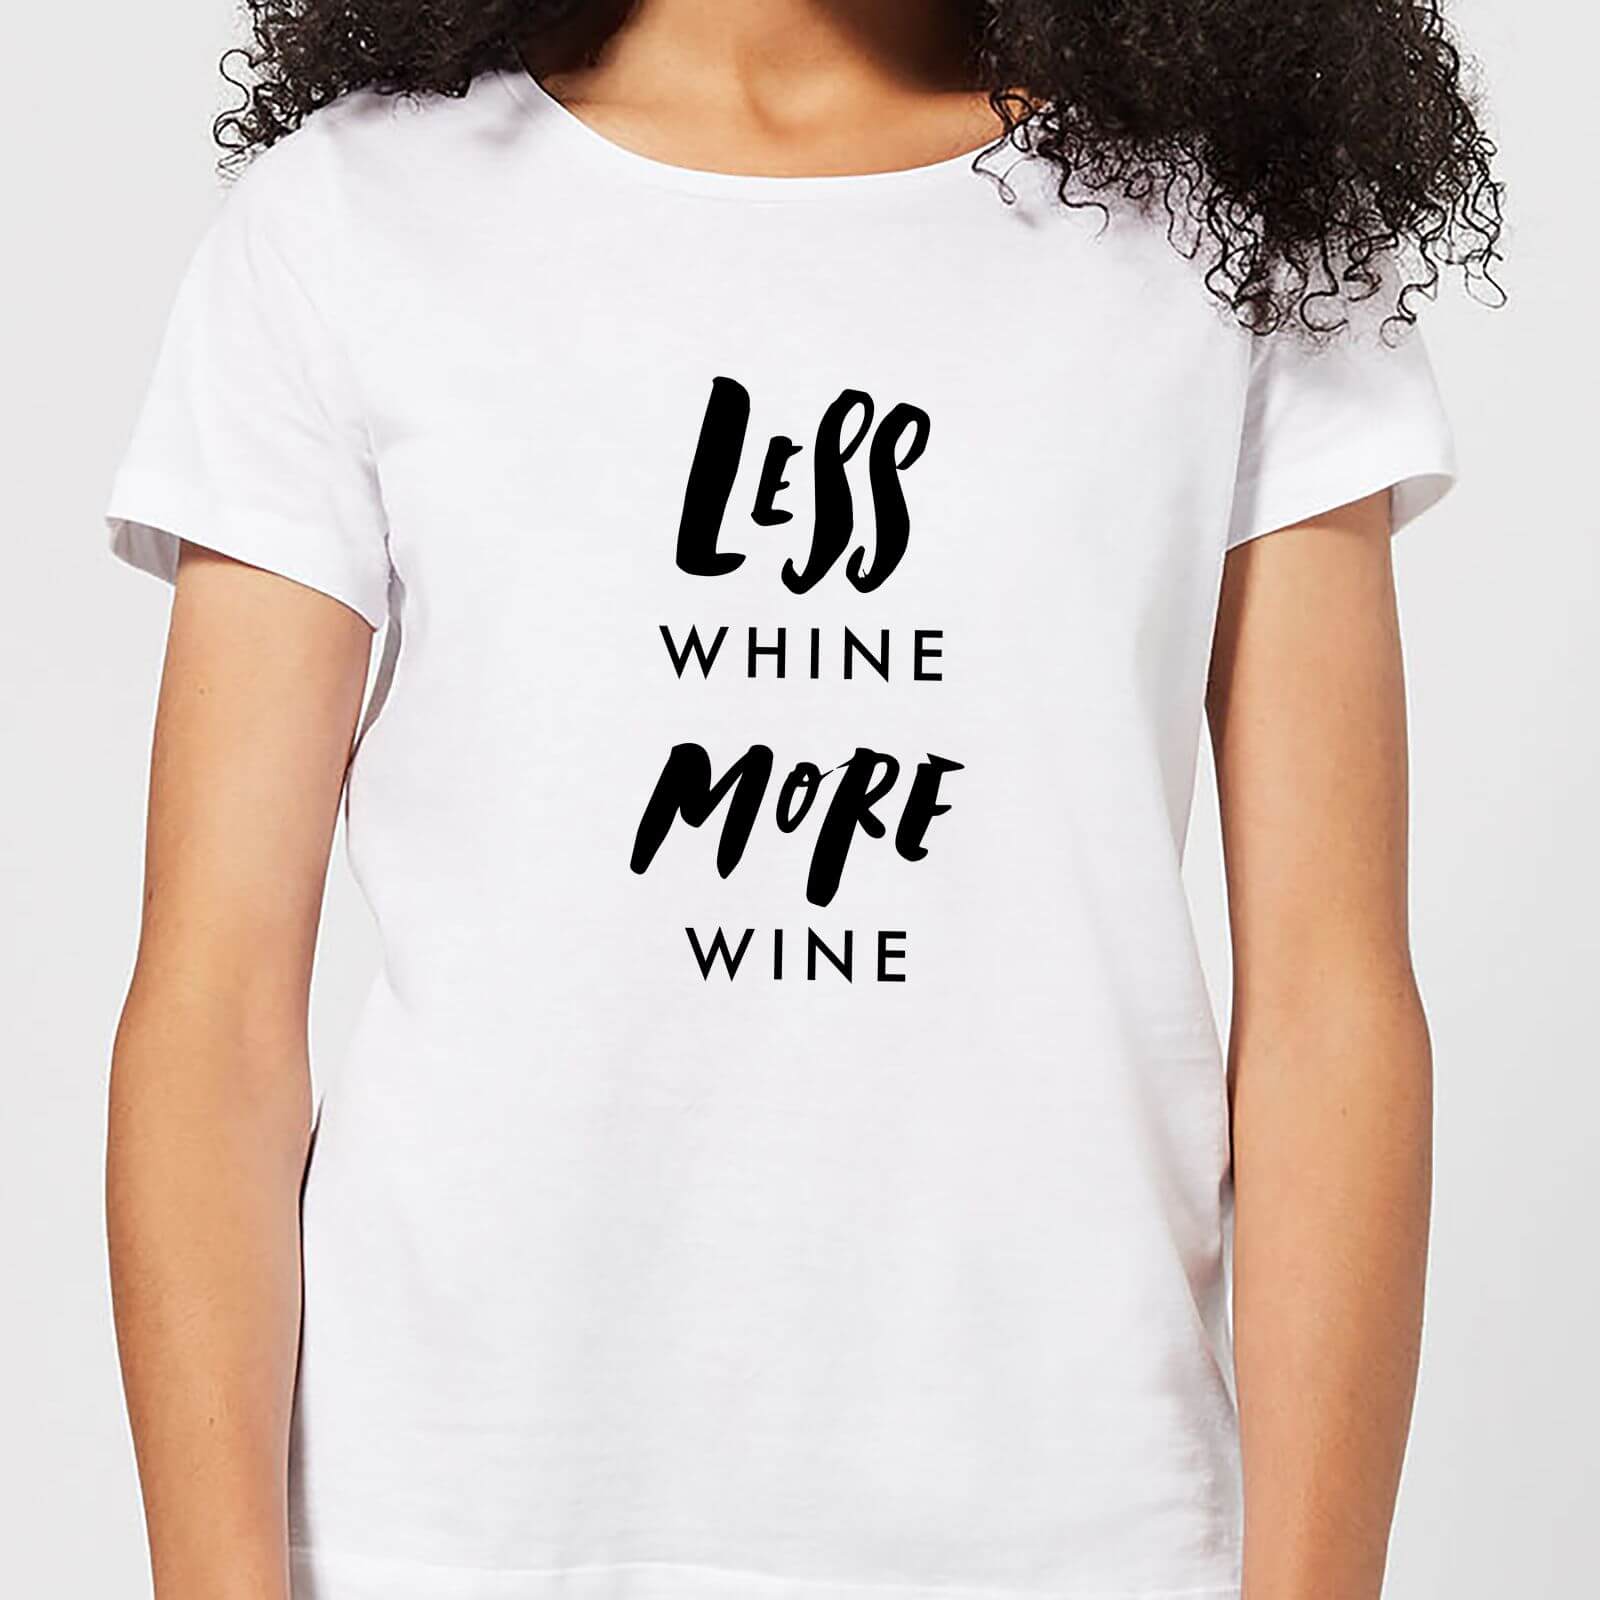 Less Whine, More Wine Women's T-Shirt - White - S - White